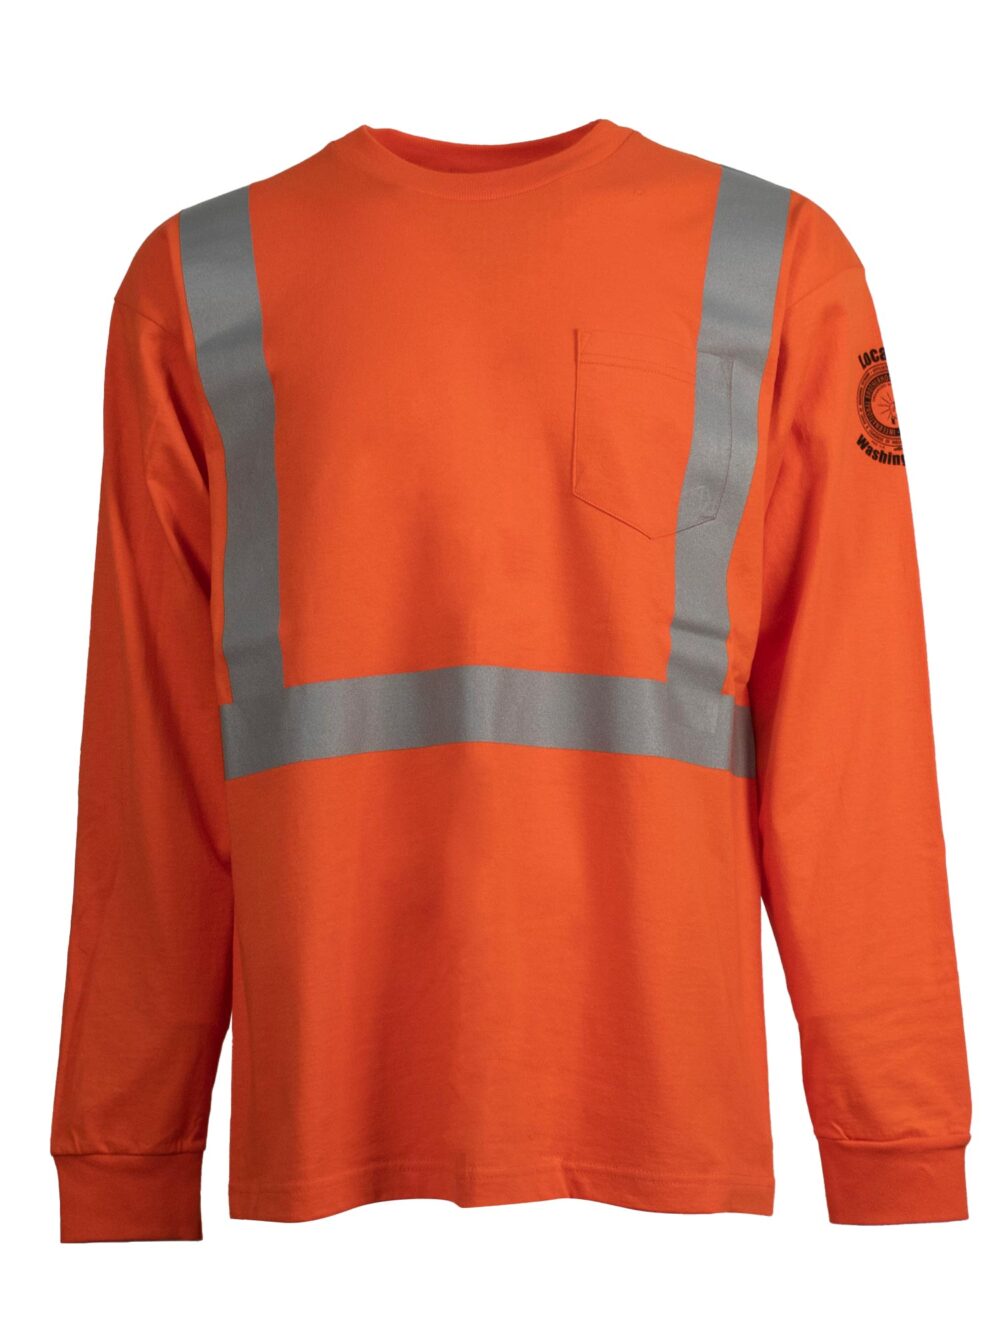 Long Sleeve Safety Pocket Shirt (Bright Orange) - Frontside